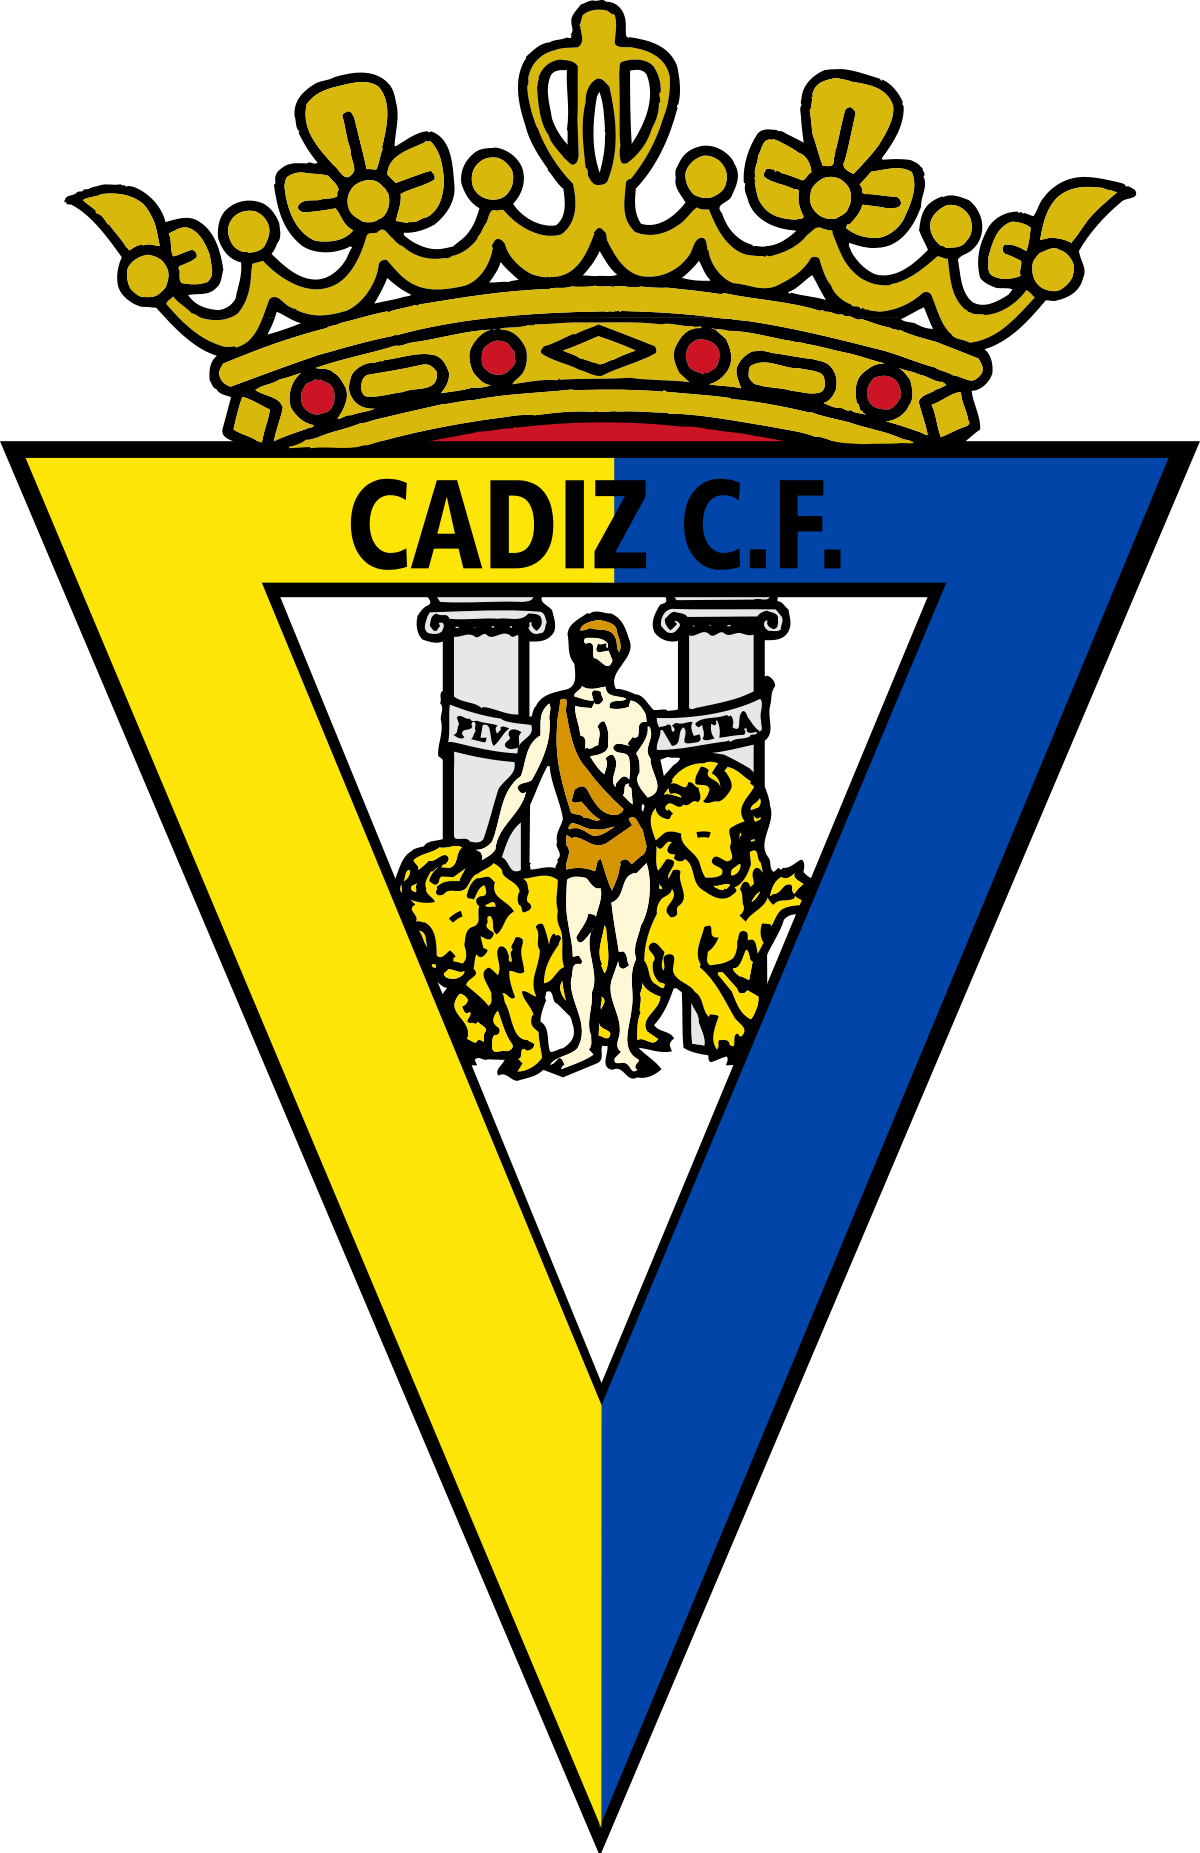 Cadiz vs Levante H2H 14 aug 2021 Head to Head stats prediction